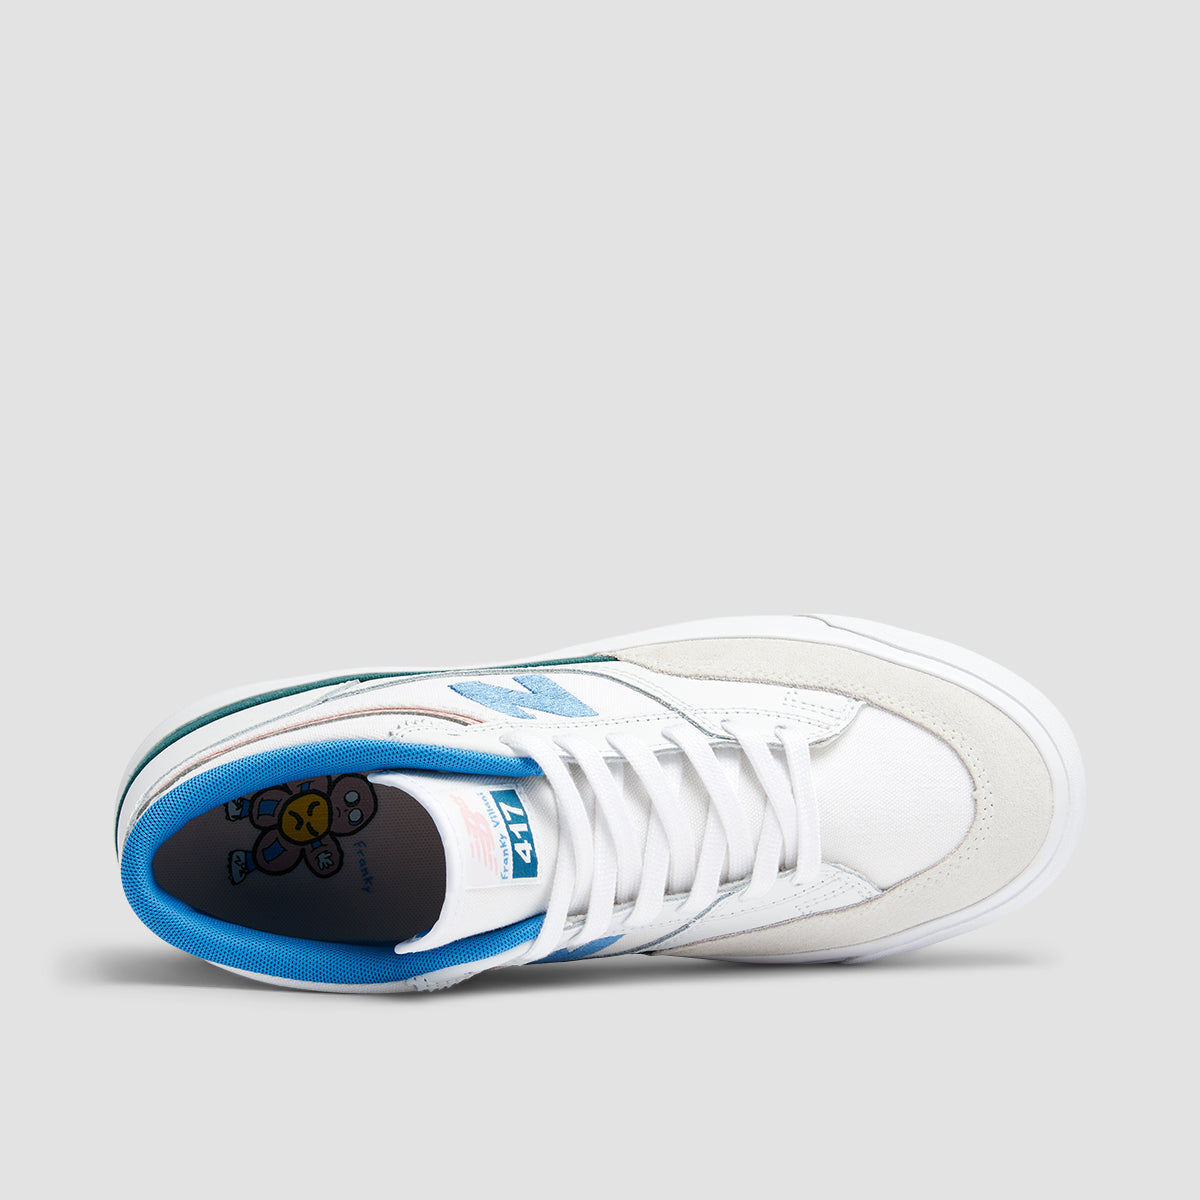 New Balance Numeric Franky Villani 417 Mid Top Shoes - White/Blue Laguna